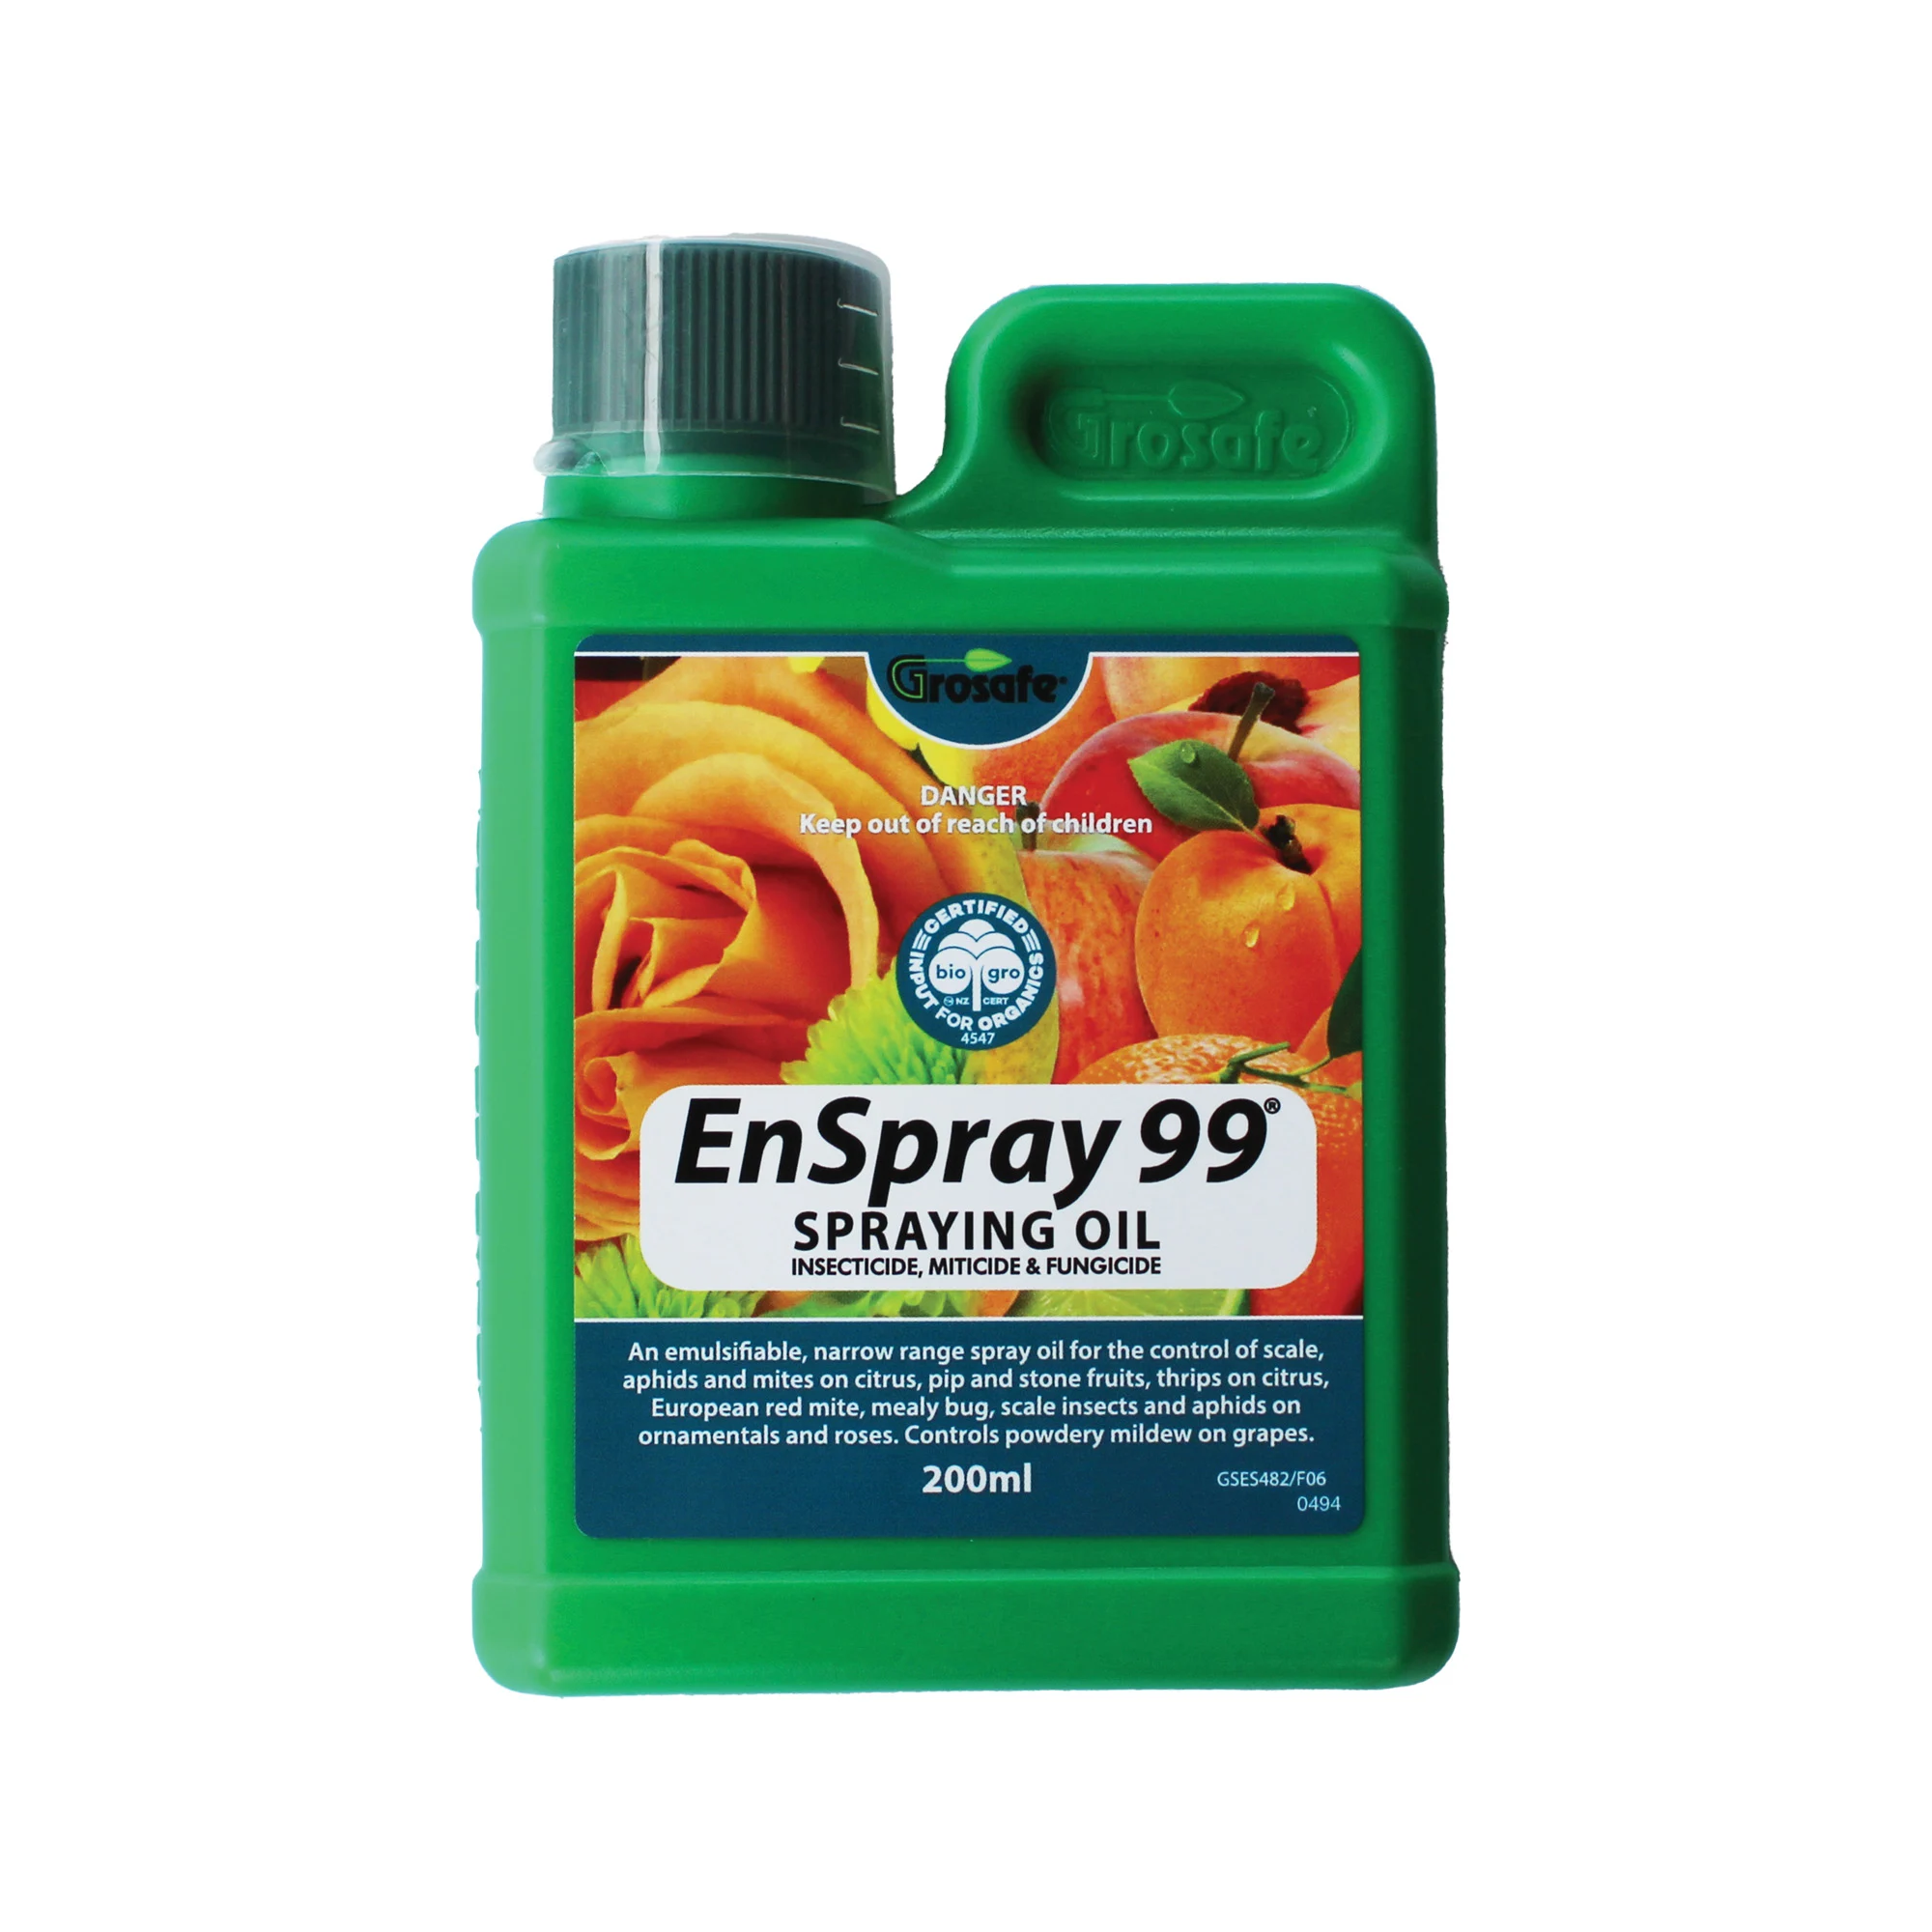 Grosafe EnSpray 99 Spraying Oil